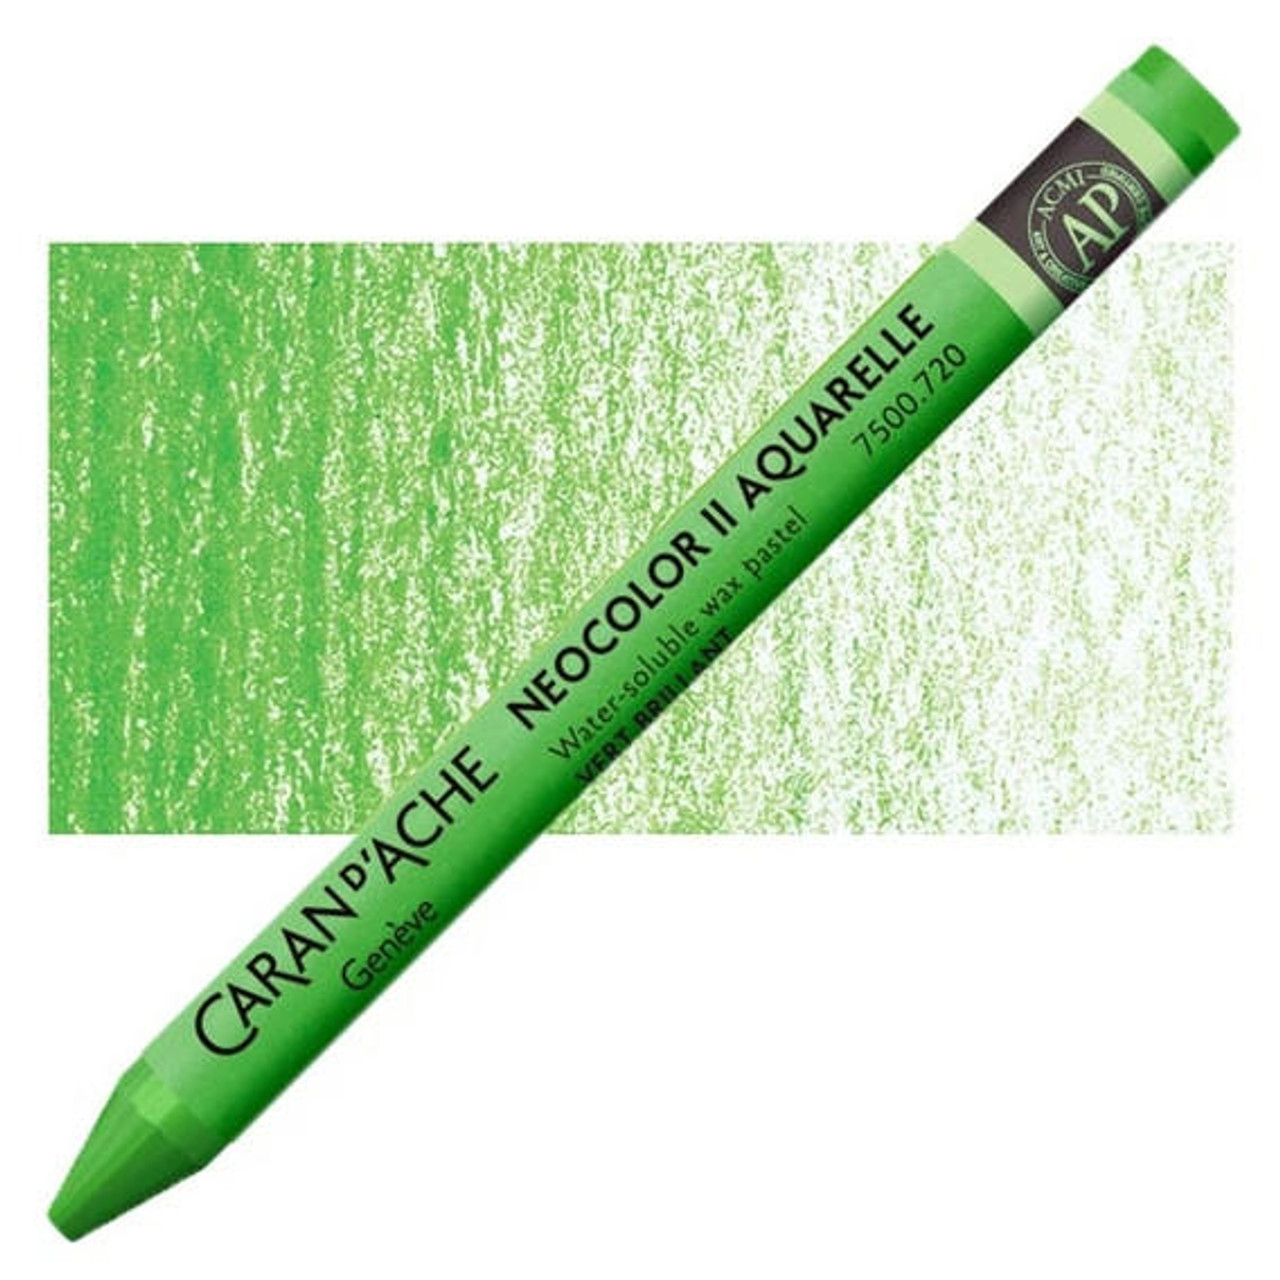 Caran d'Ache Neocolor II Crayon - Bright Green (7500.72)